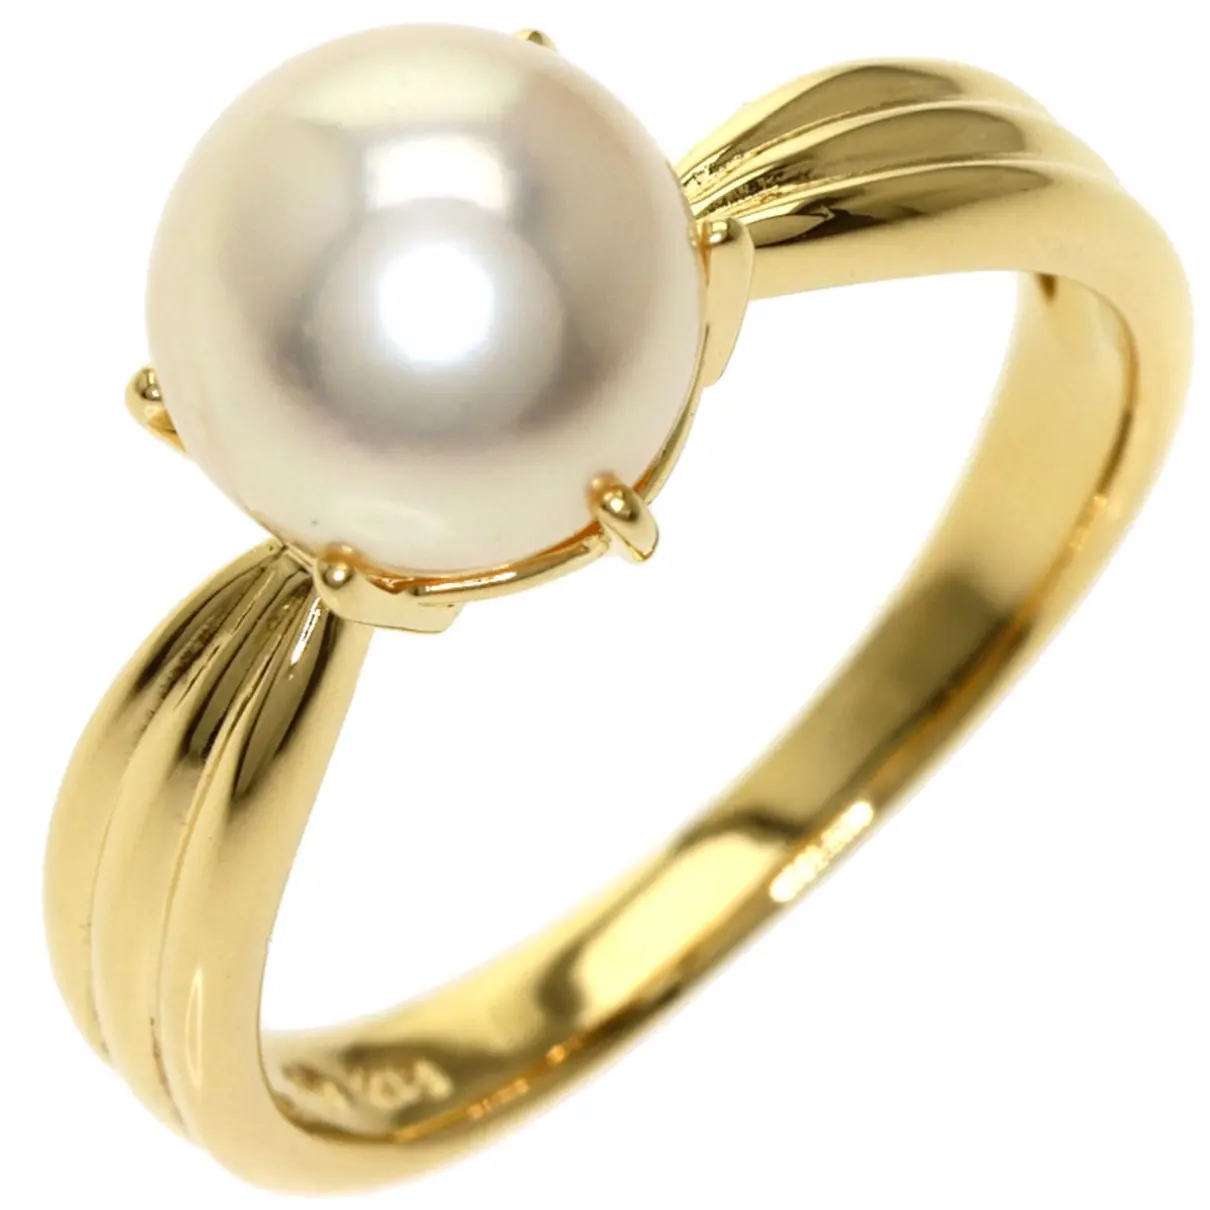 Buy Tasaki Yellow gold ring online